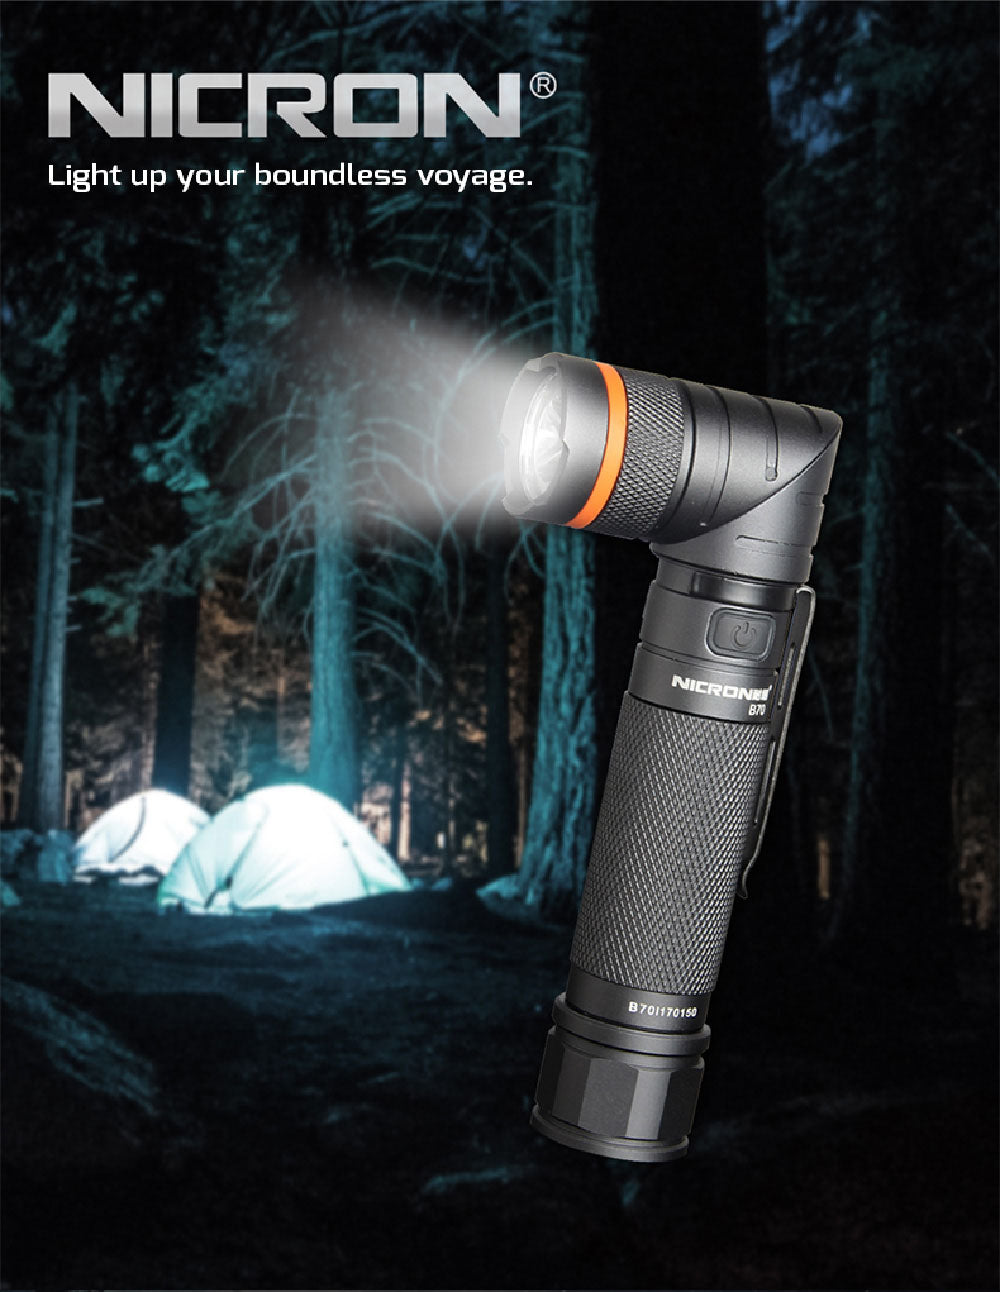 Nicron Flashlight B70 High Brightness Magnetic Twist Led Flashlight with 9 Modes